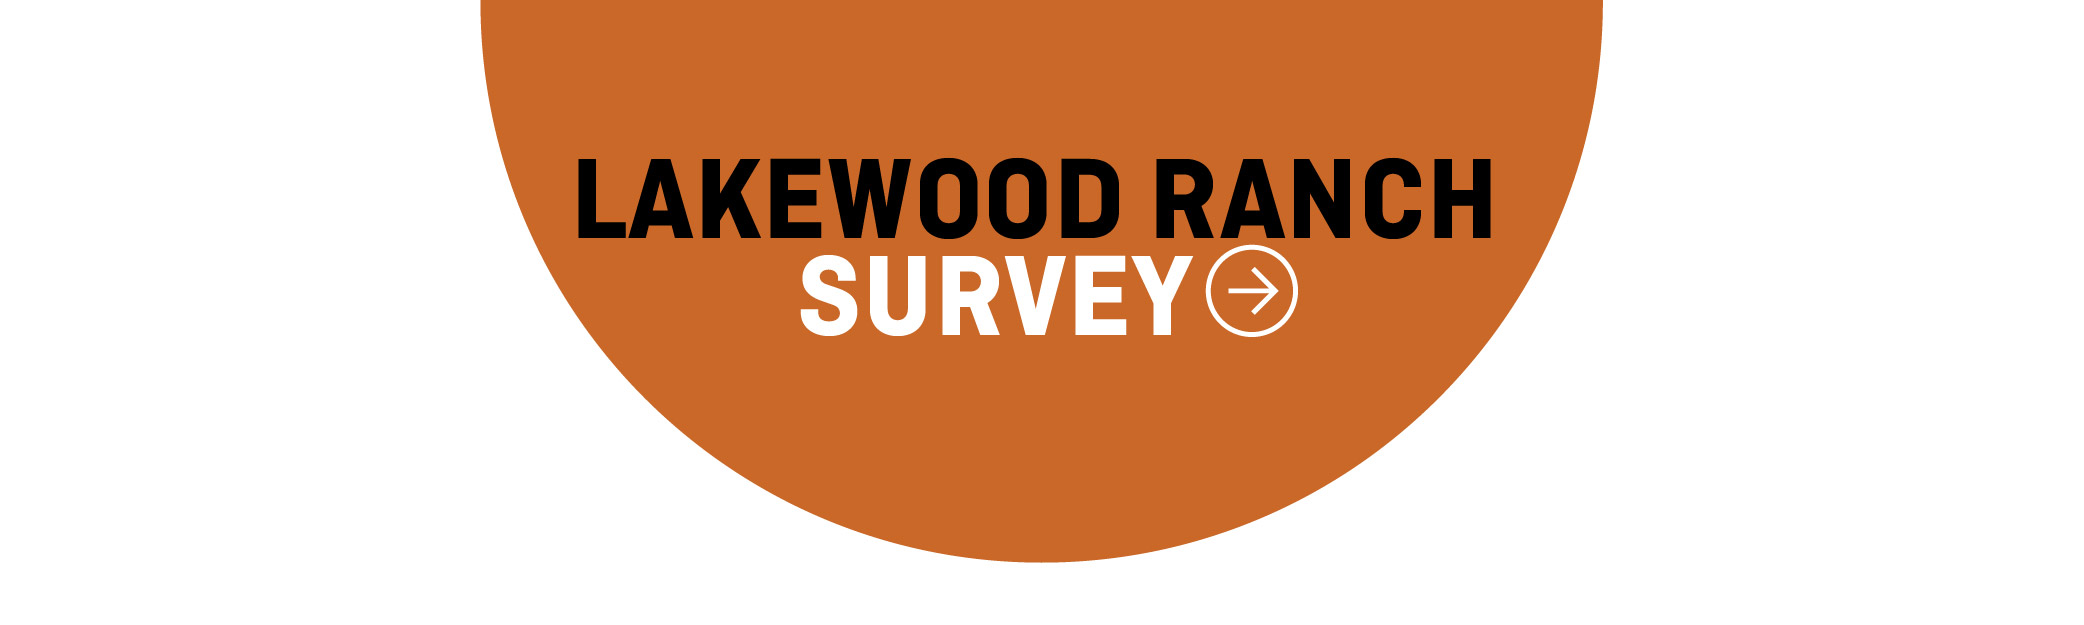 Lakewood Ranch Survey